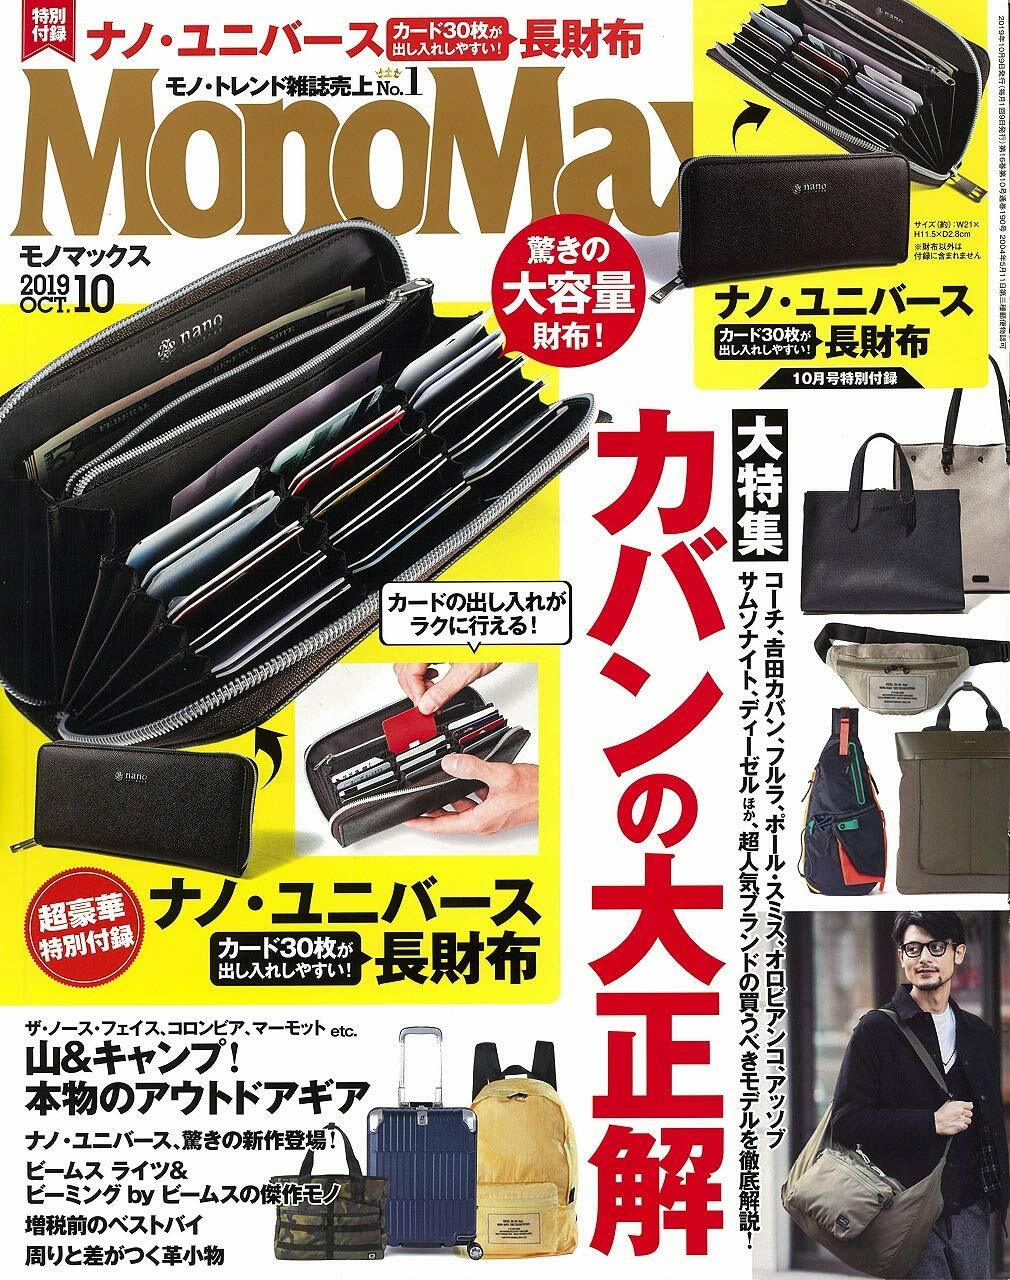 Mono Max (モノ·マックス) 2019年 10月號 [雜誌] (月刊, 雜誌)